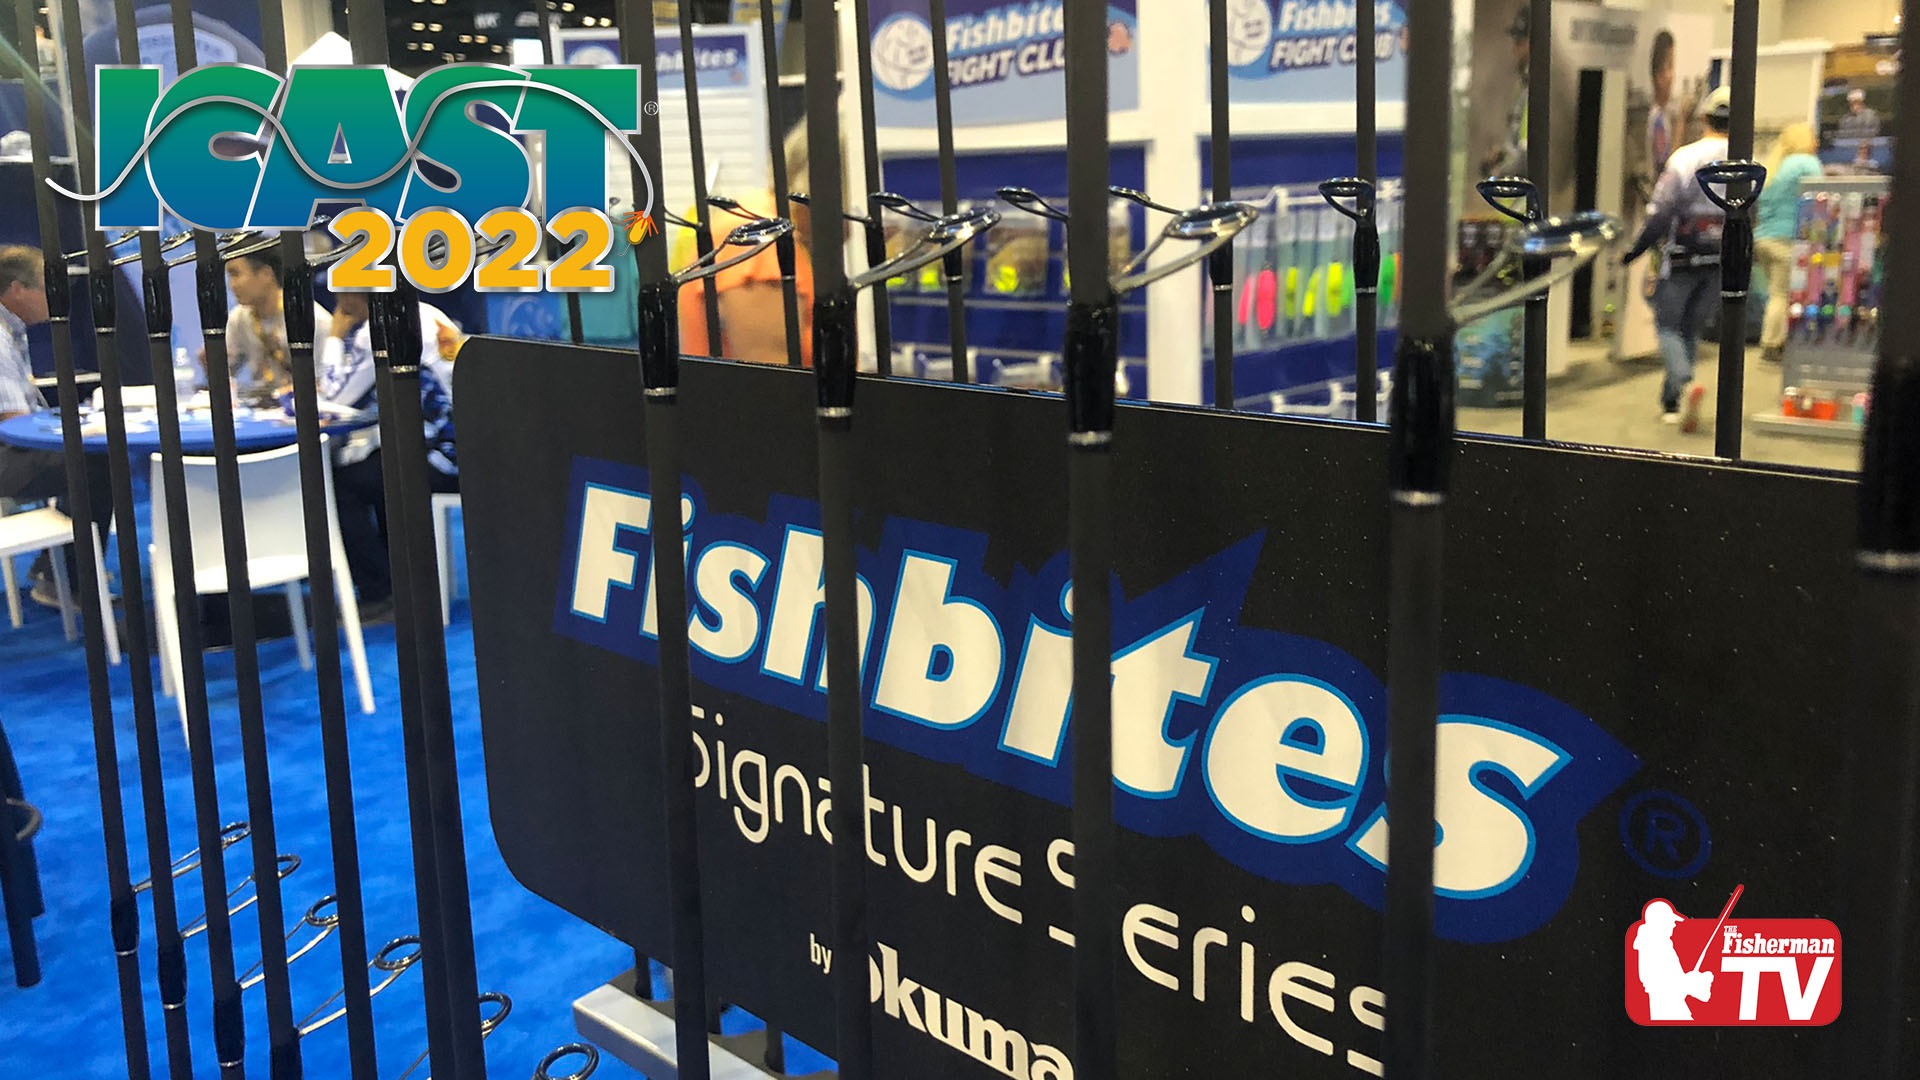 ICAST '22: The Fisherman's “New Product Spotlight” - Fishbites